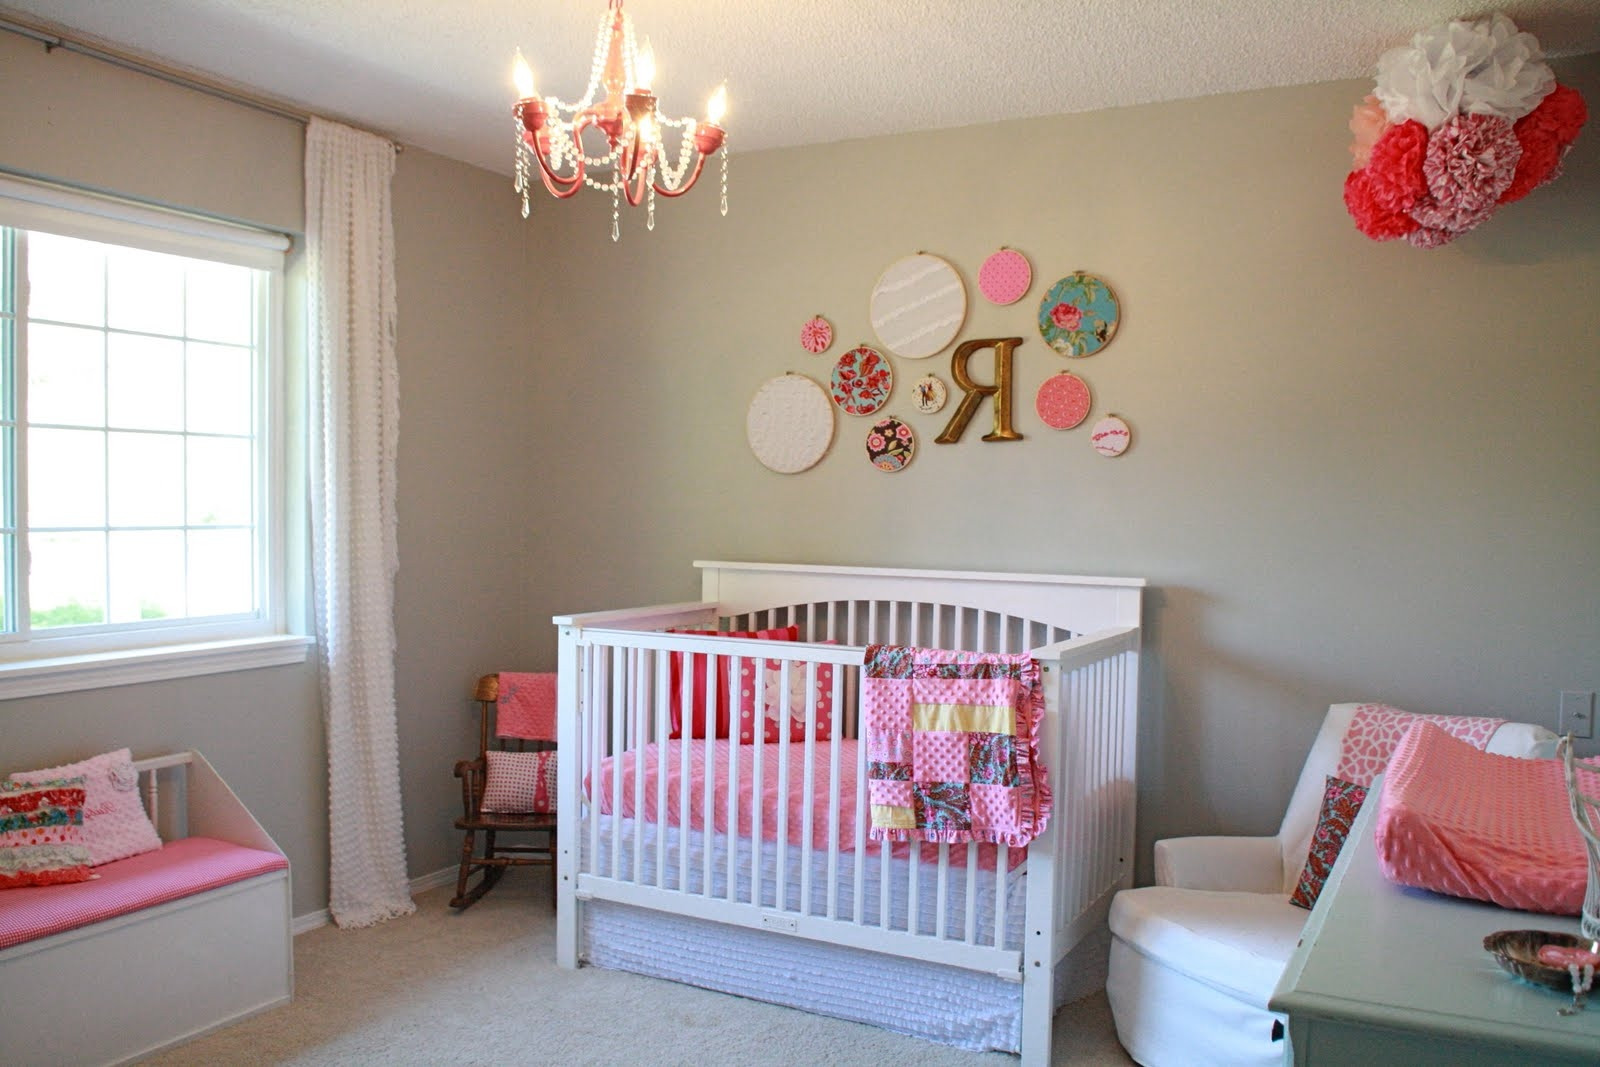 Best ideas about Baby Girls Room Decor Ideas
. Save or Pin Baby Girl Room Decor Ideas Now.